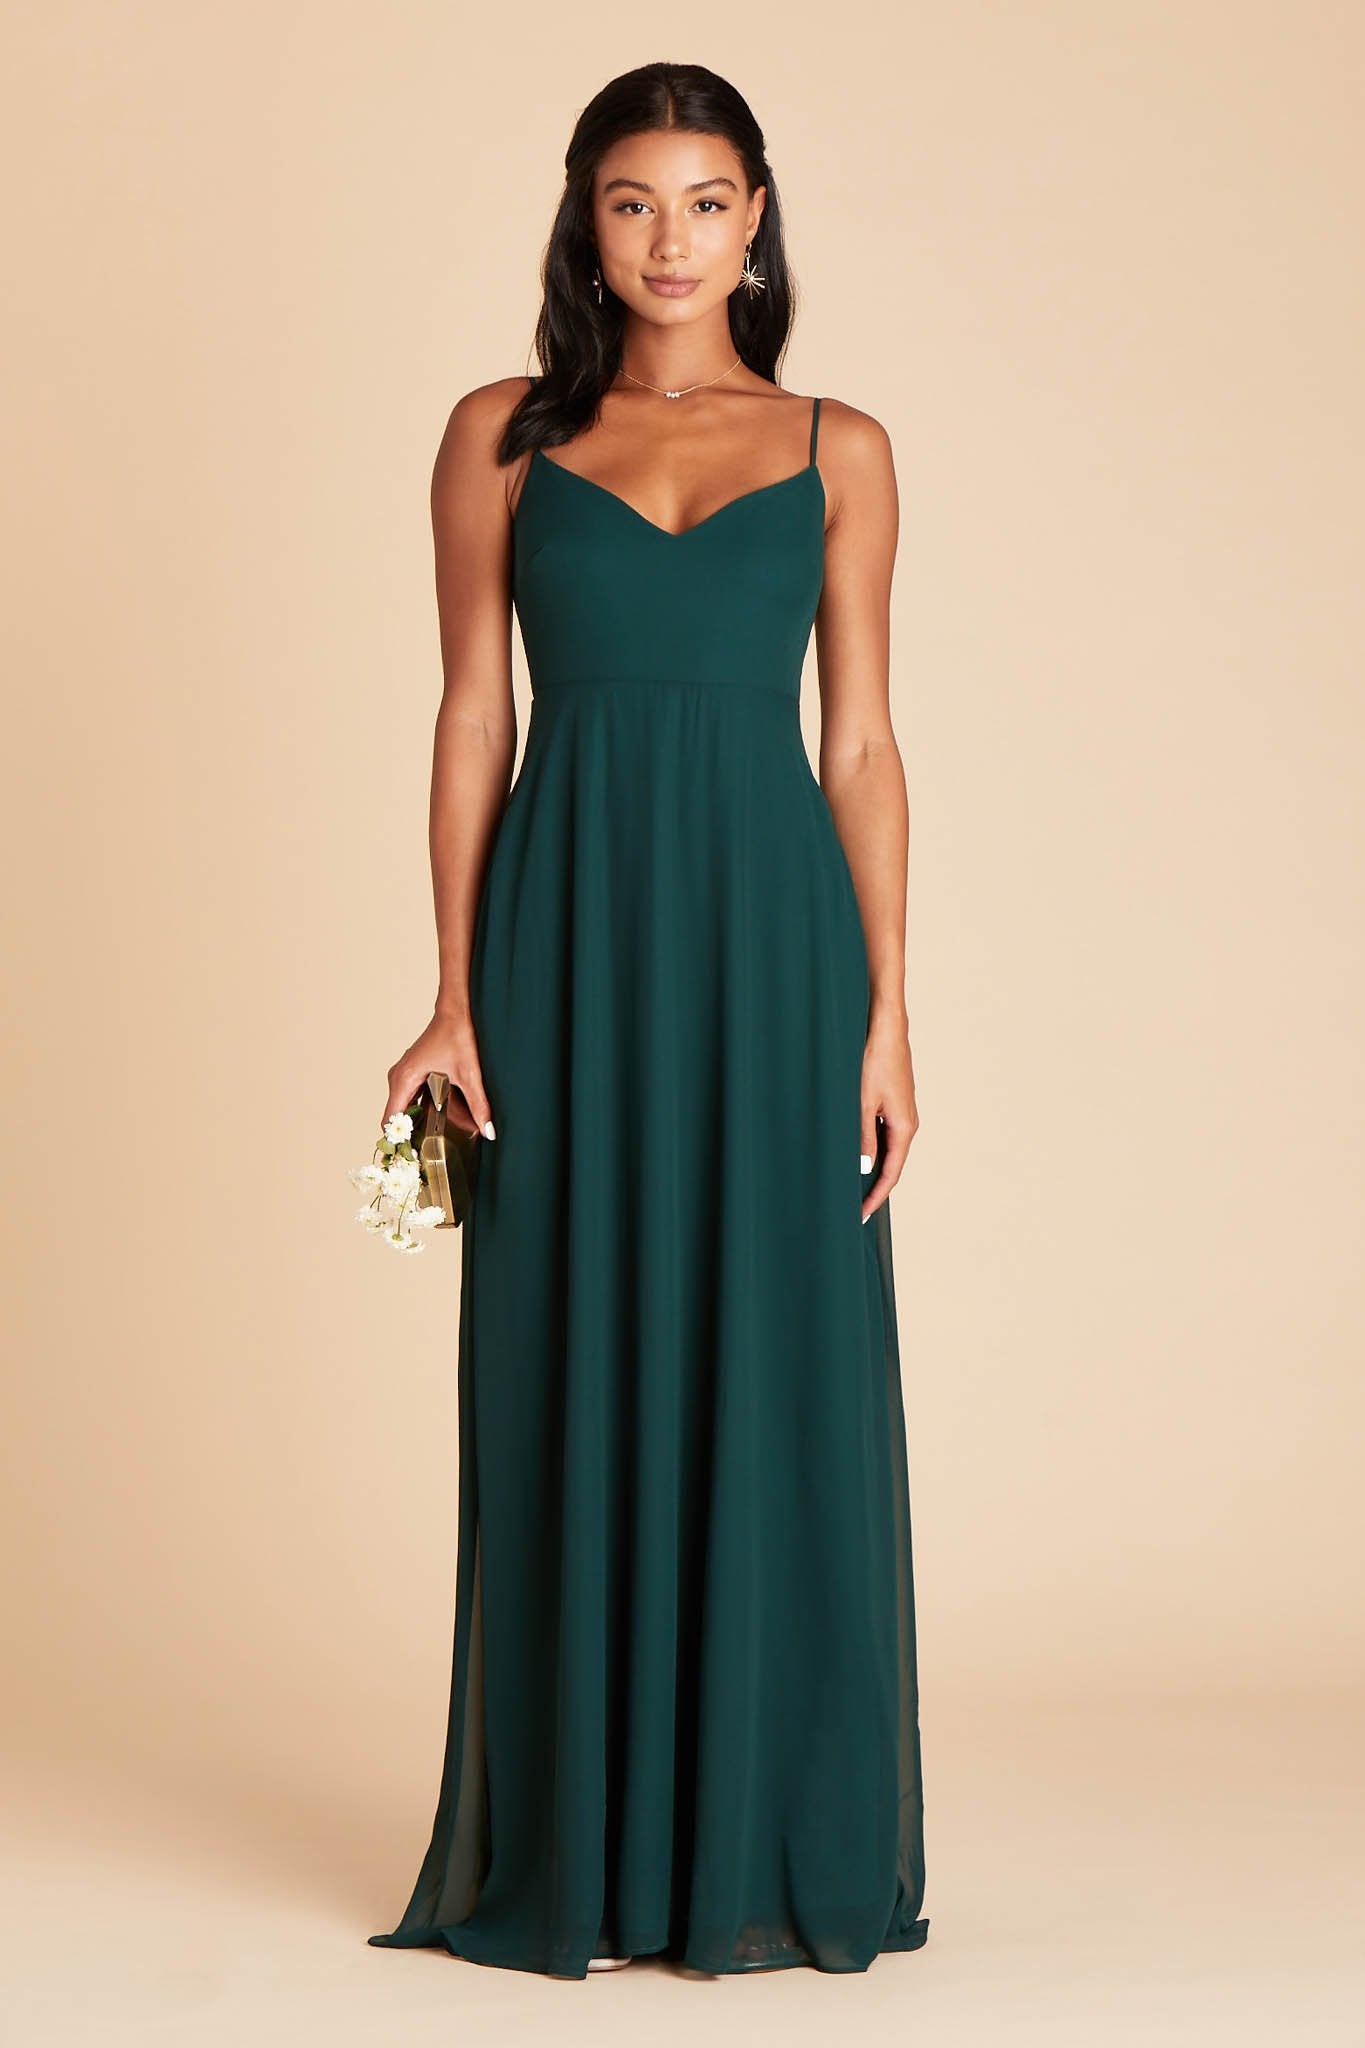 Devin Convertible Chiffon Bridesmaid Dress in Emerald | Birdy Grey